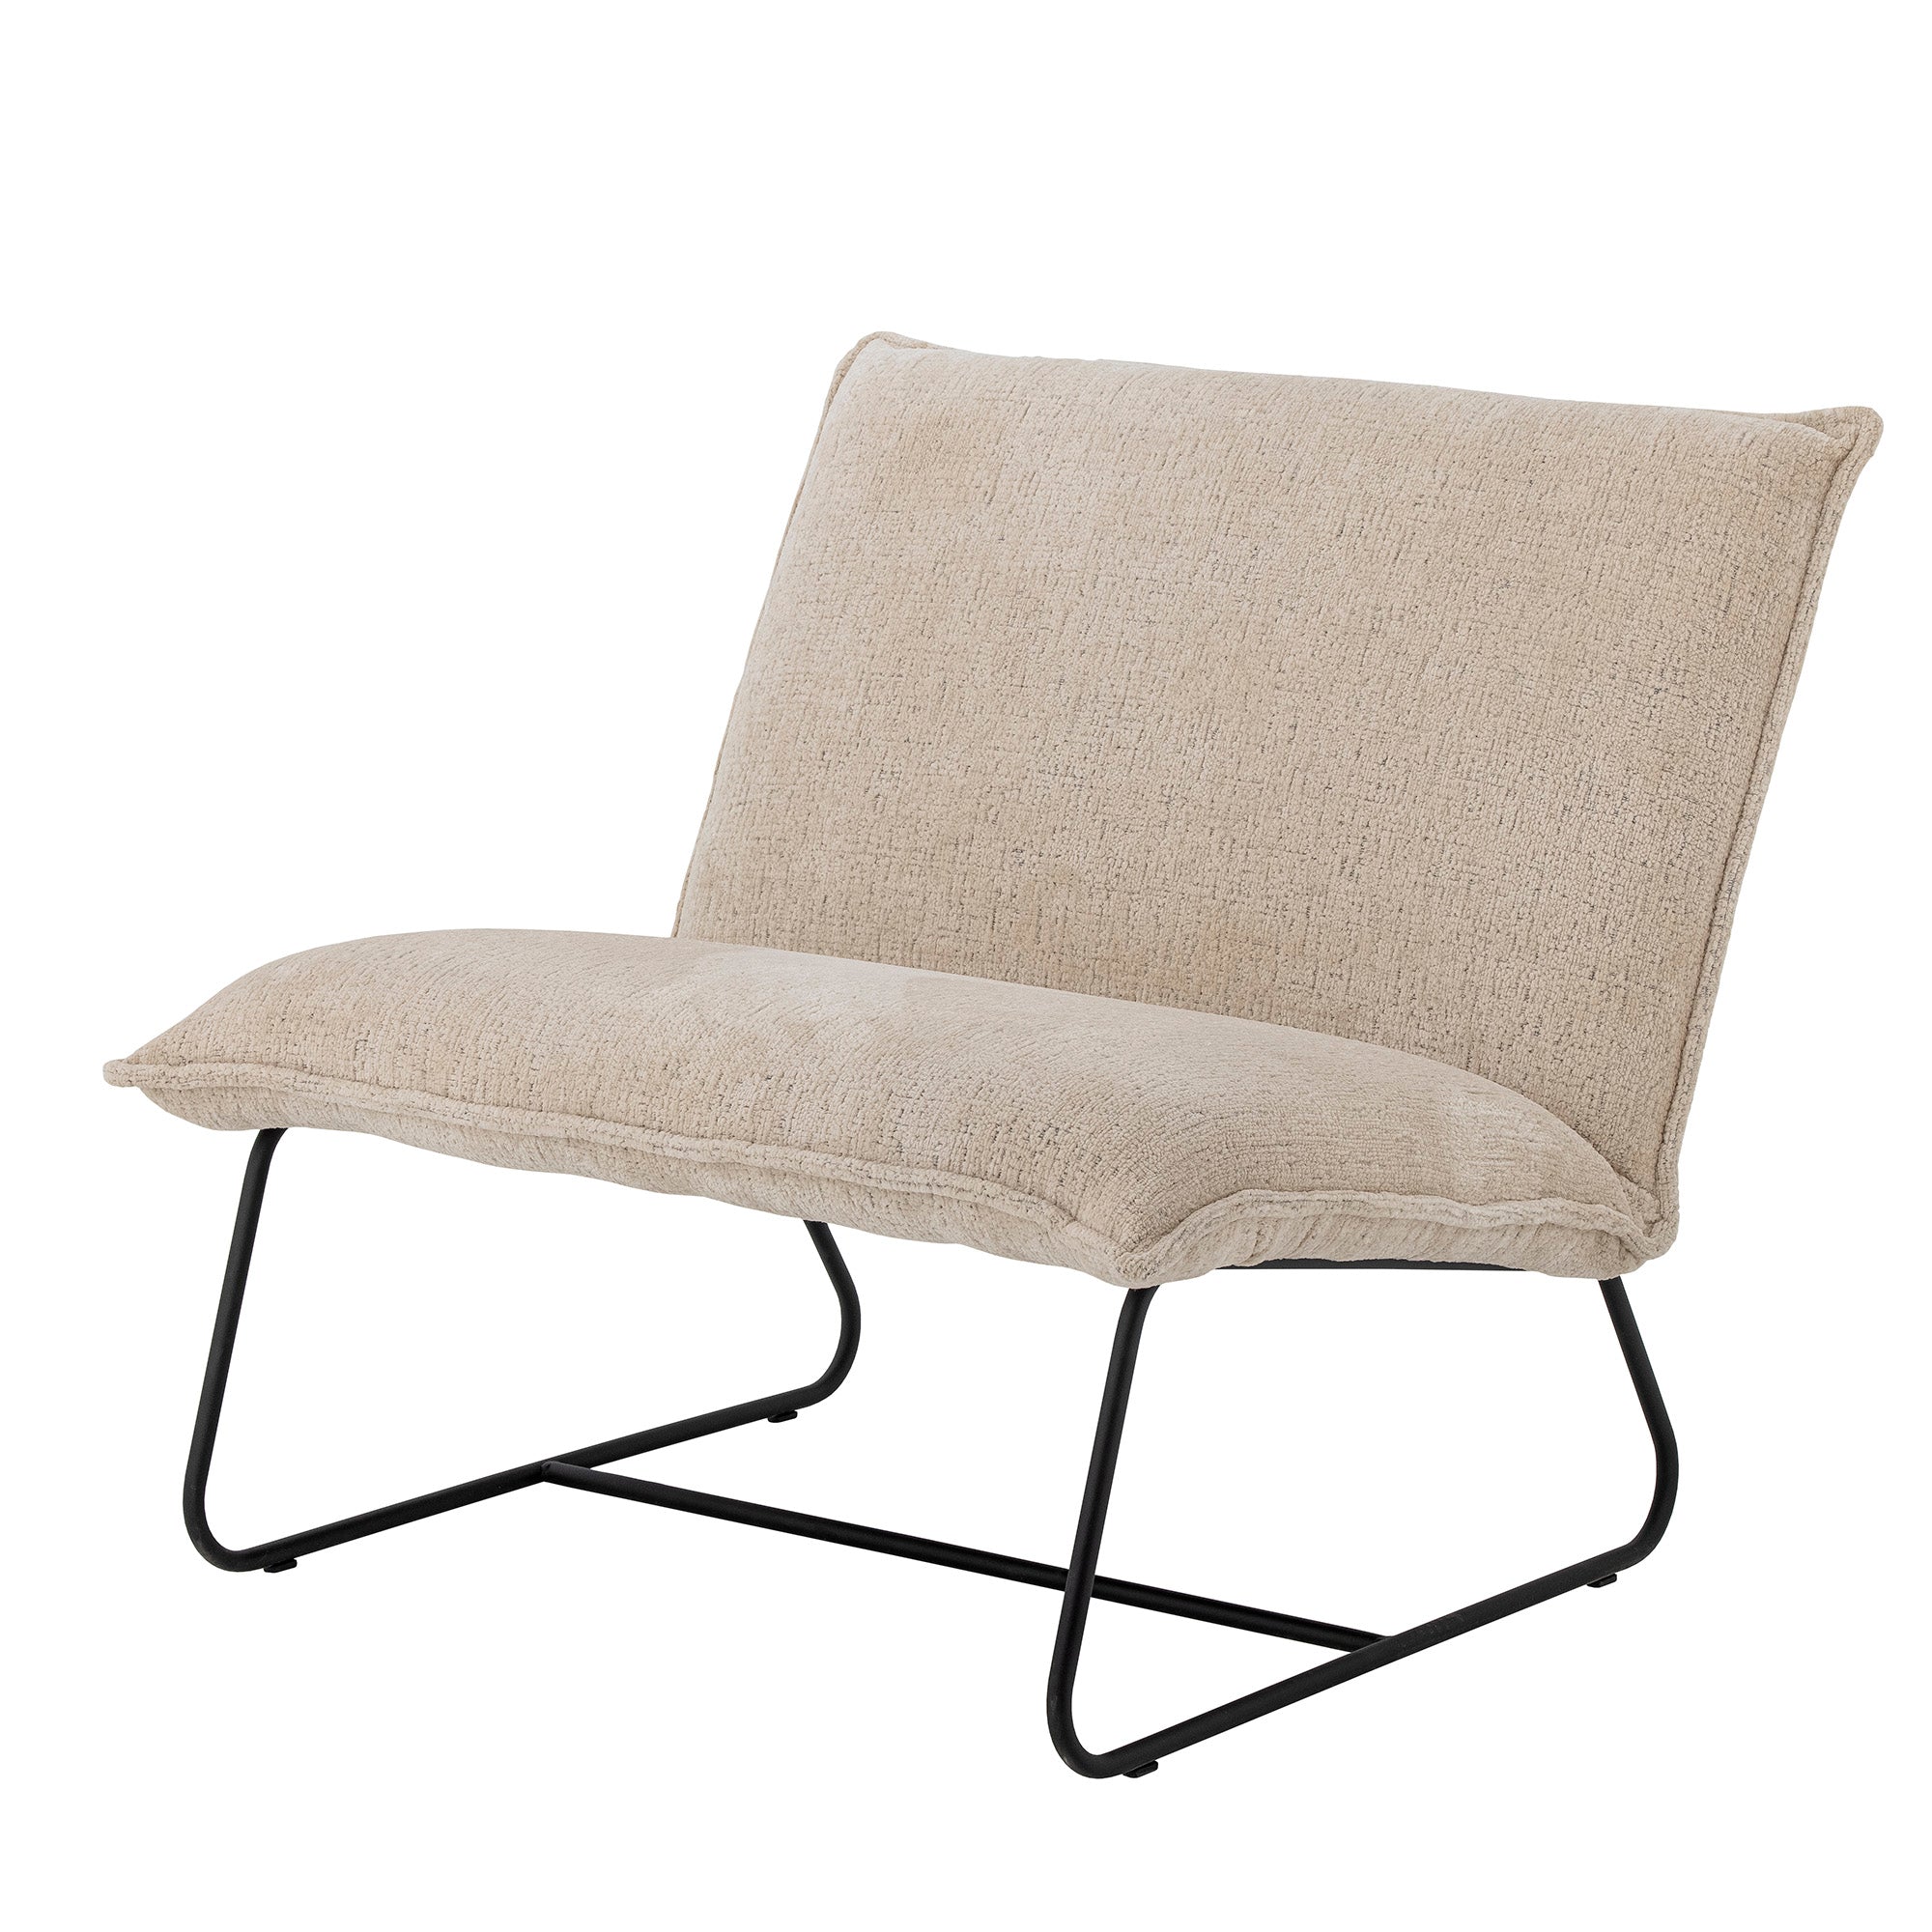 Lounge chair Cape